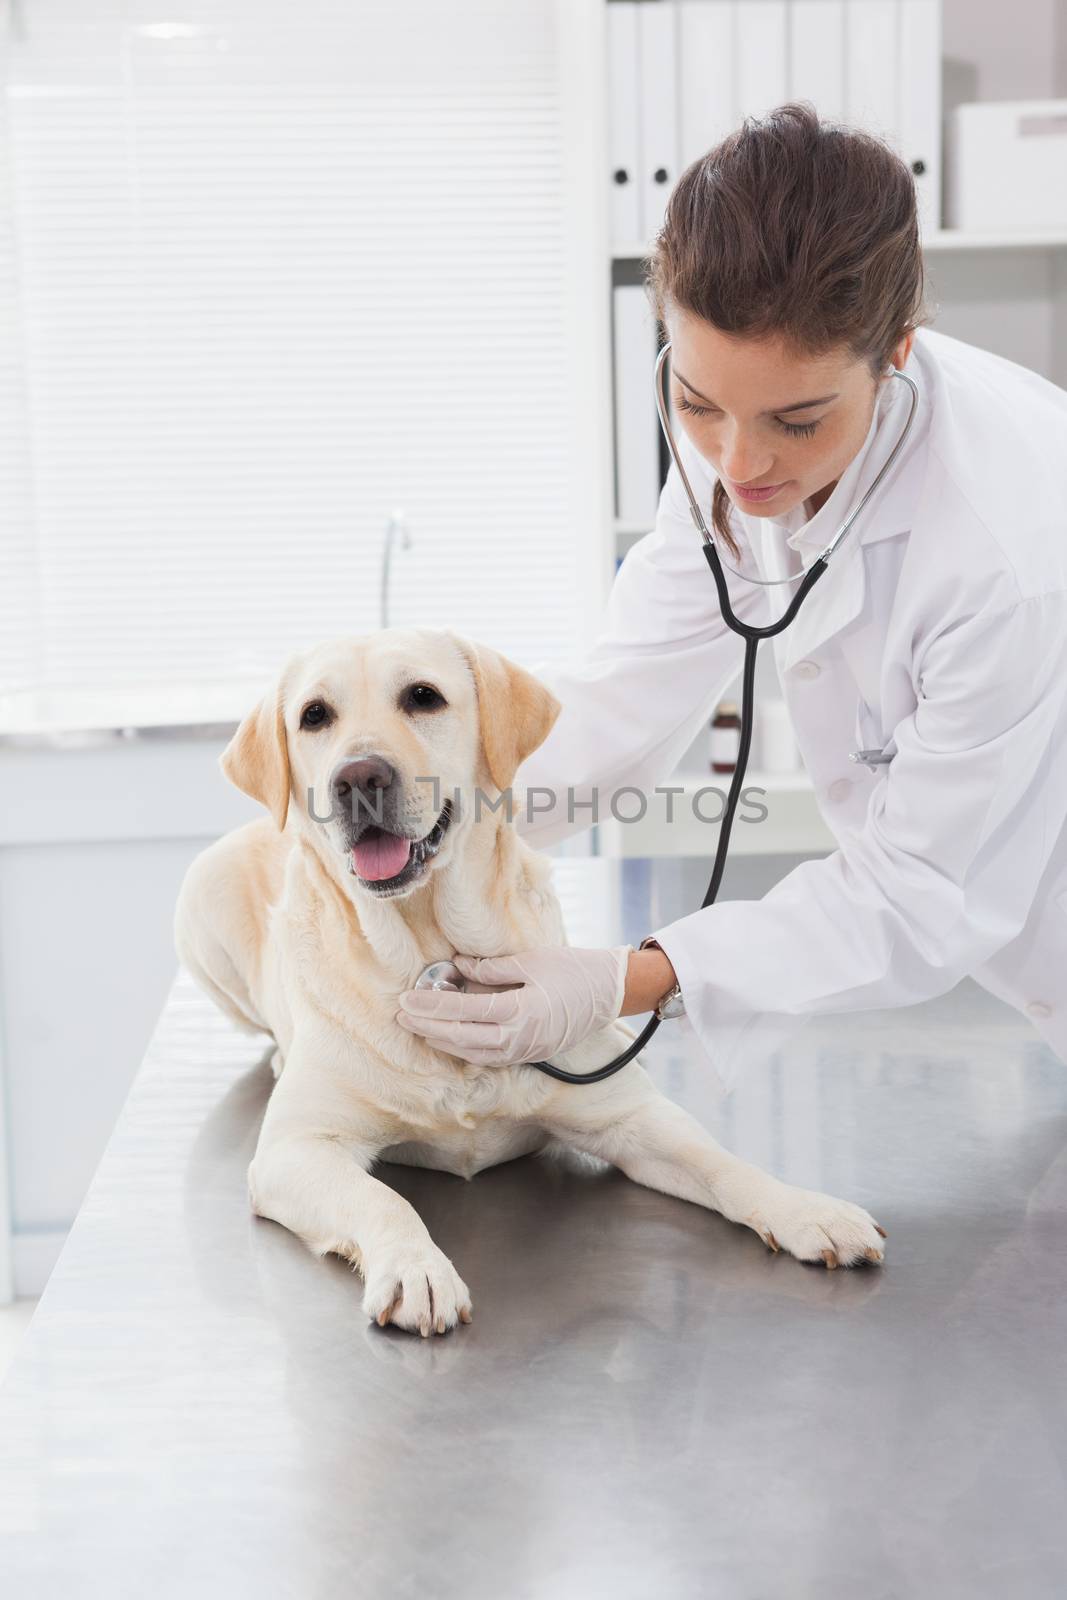 Cheerful veterinarian examining a cute labrador in medical office